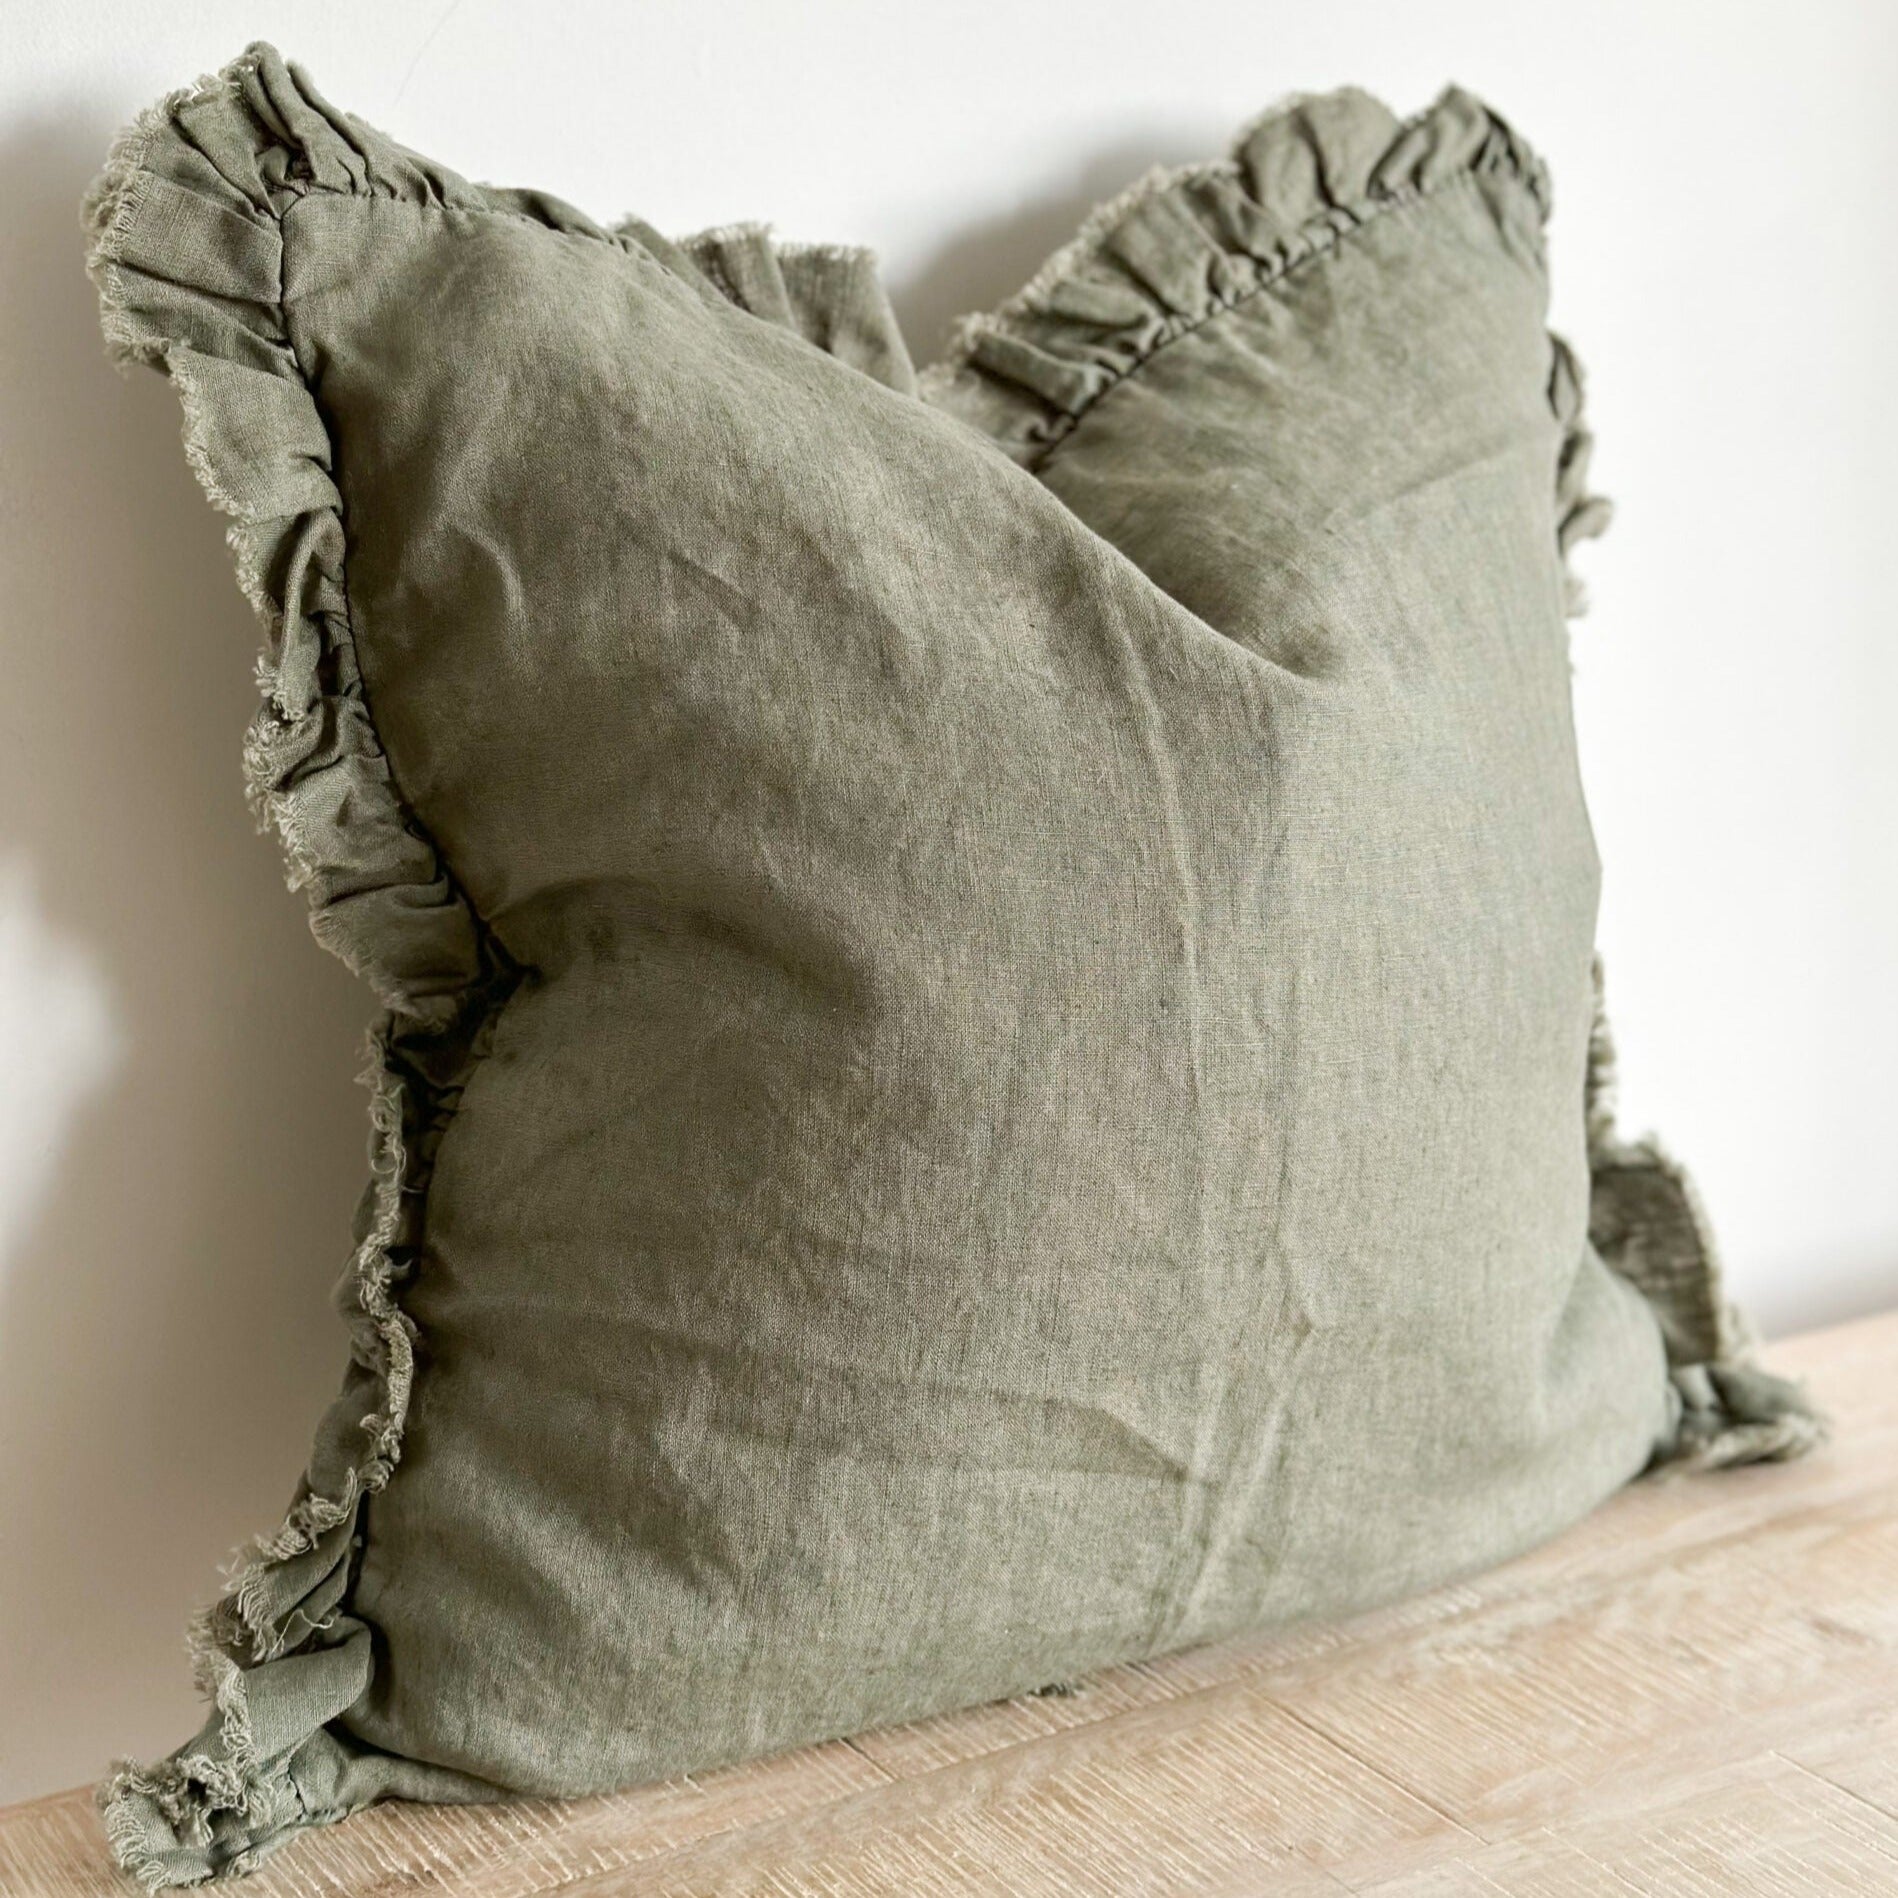 Green cushion will ruffled frayed edge.